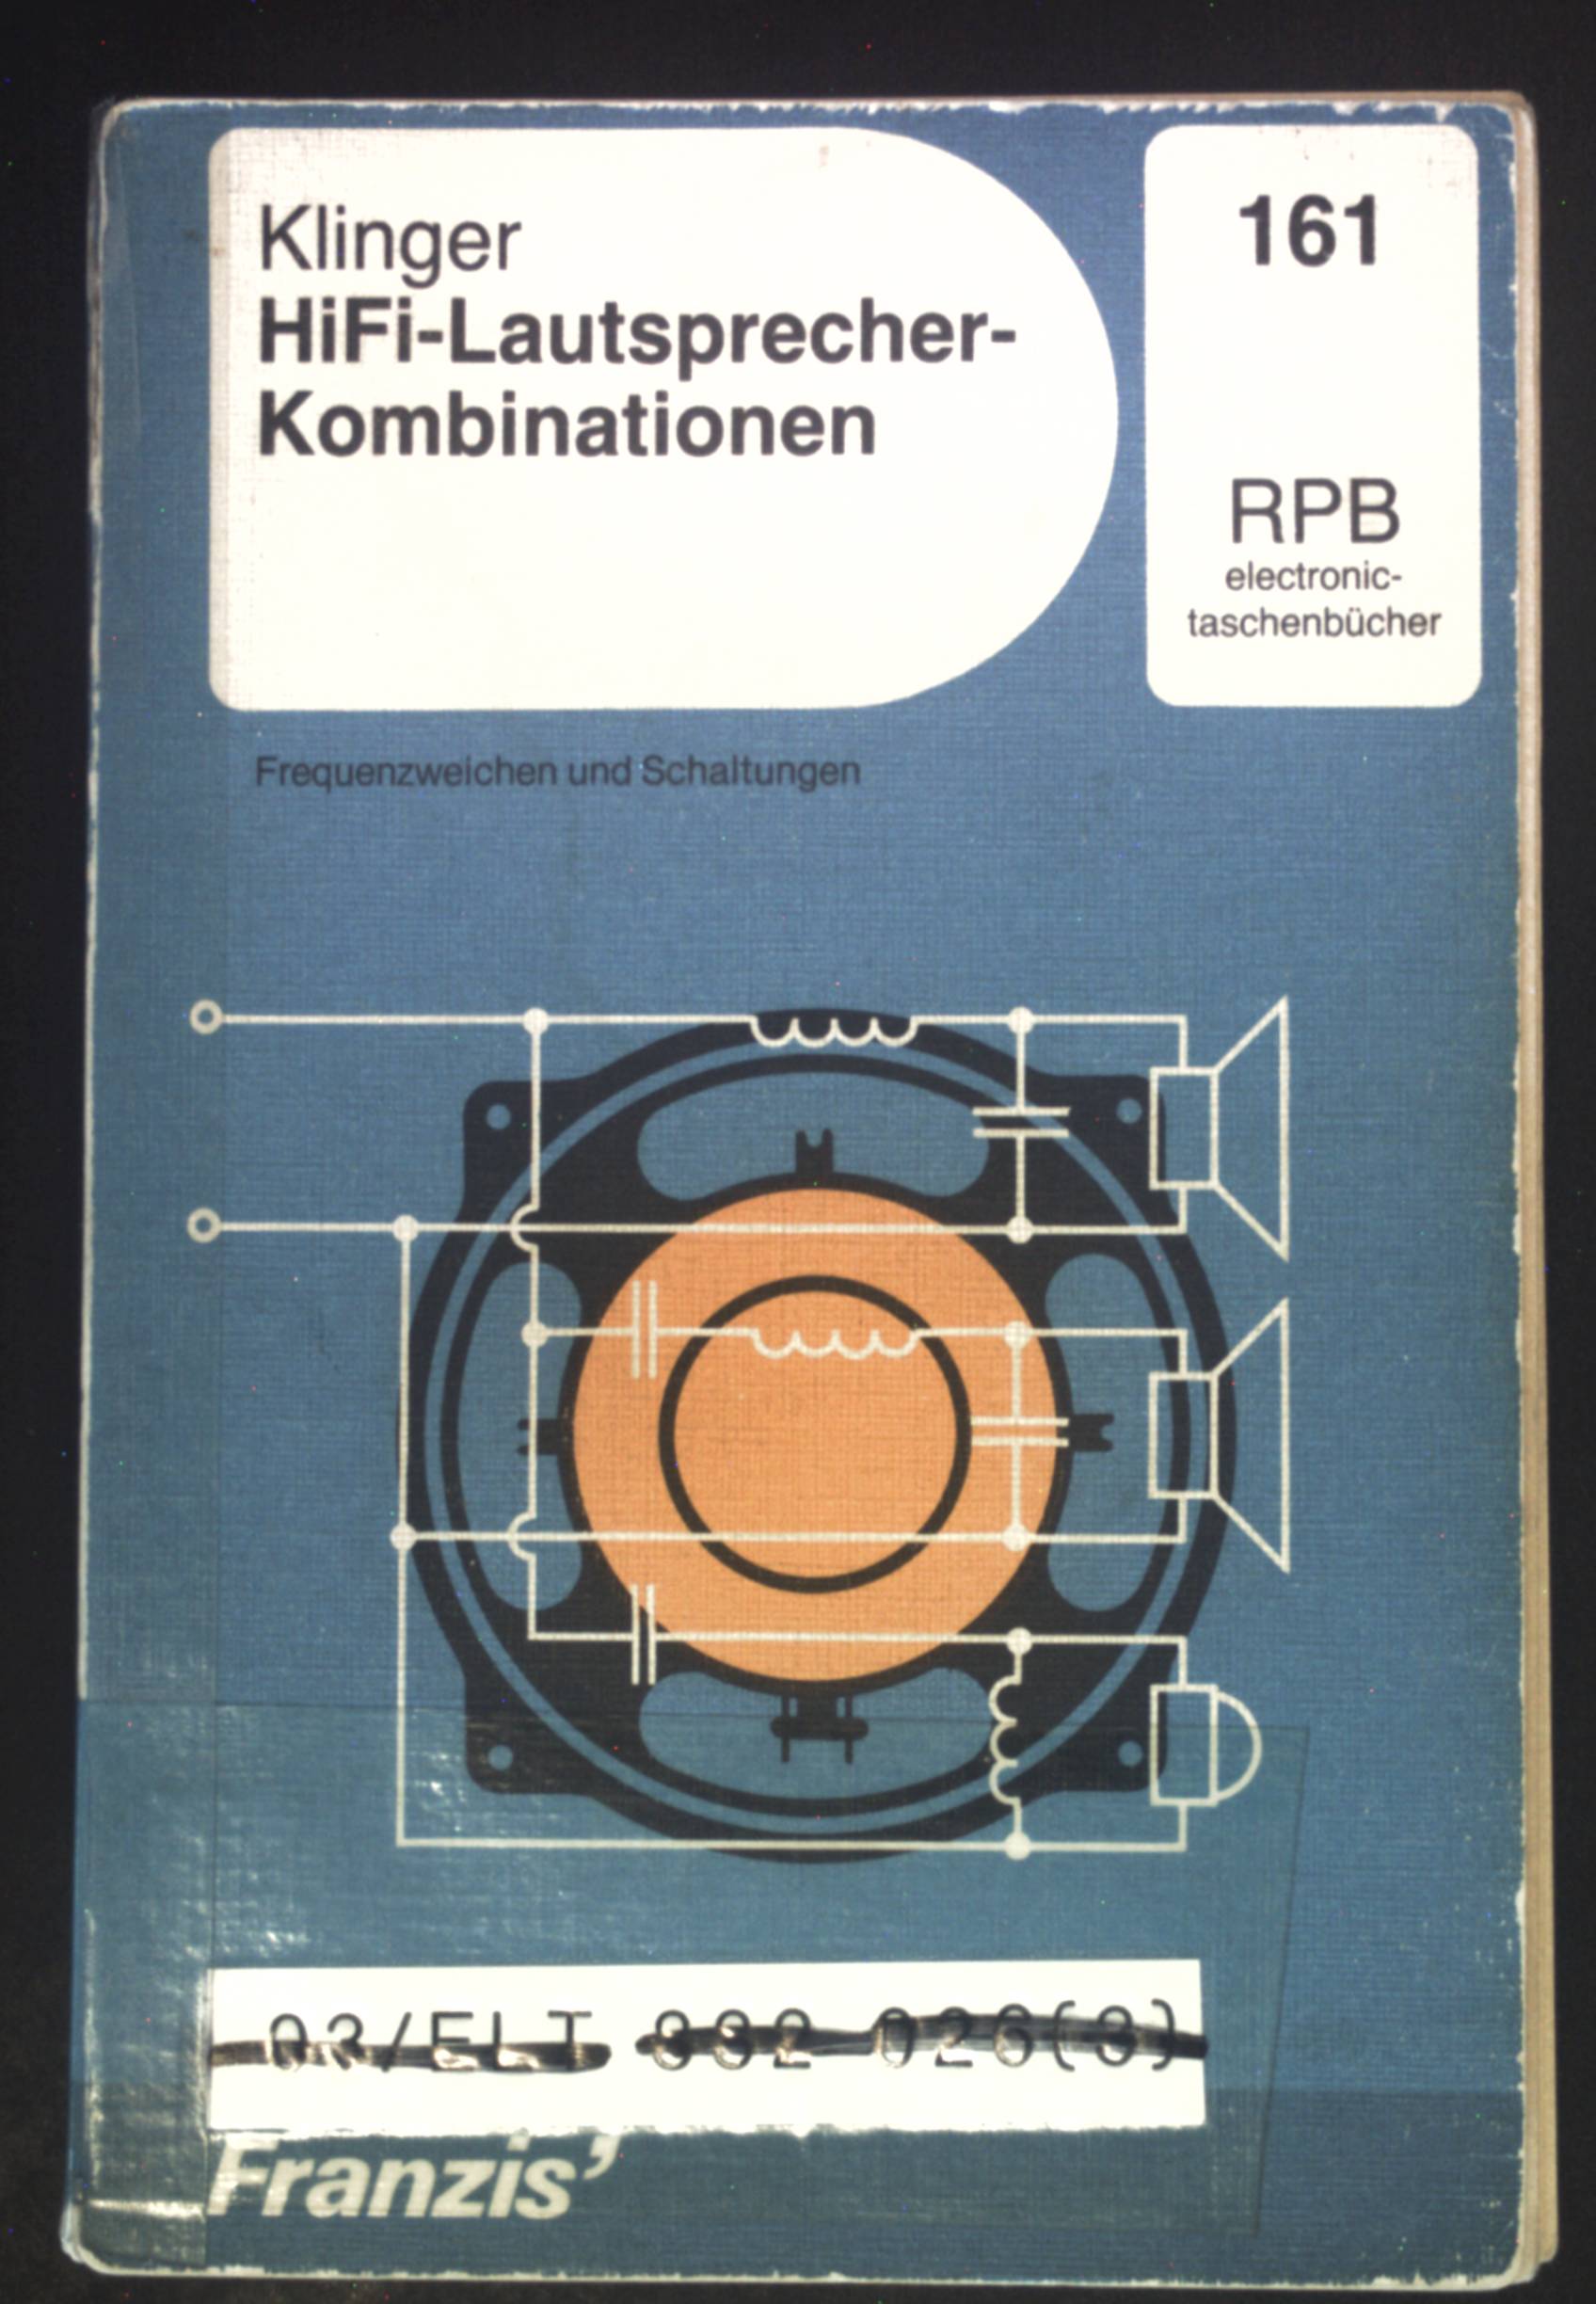 HiFi-Lautsprecher-Kombinationen : Frequenzweichen u. Schaltungen. RPB-Electronic-Taschenbücher ; Nr. 161 - Klinger, Hans Herbert